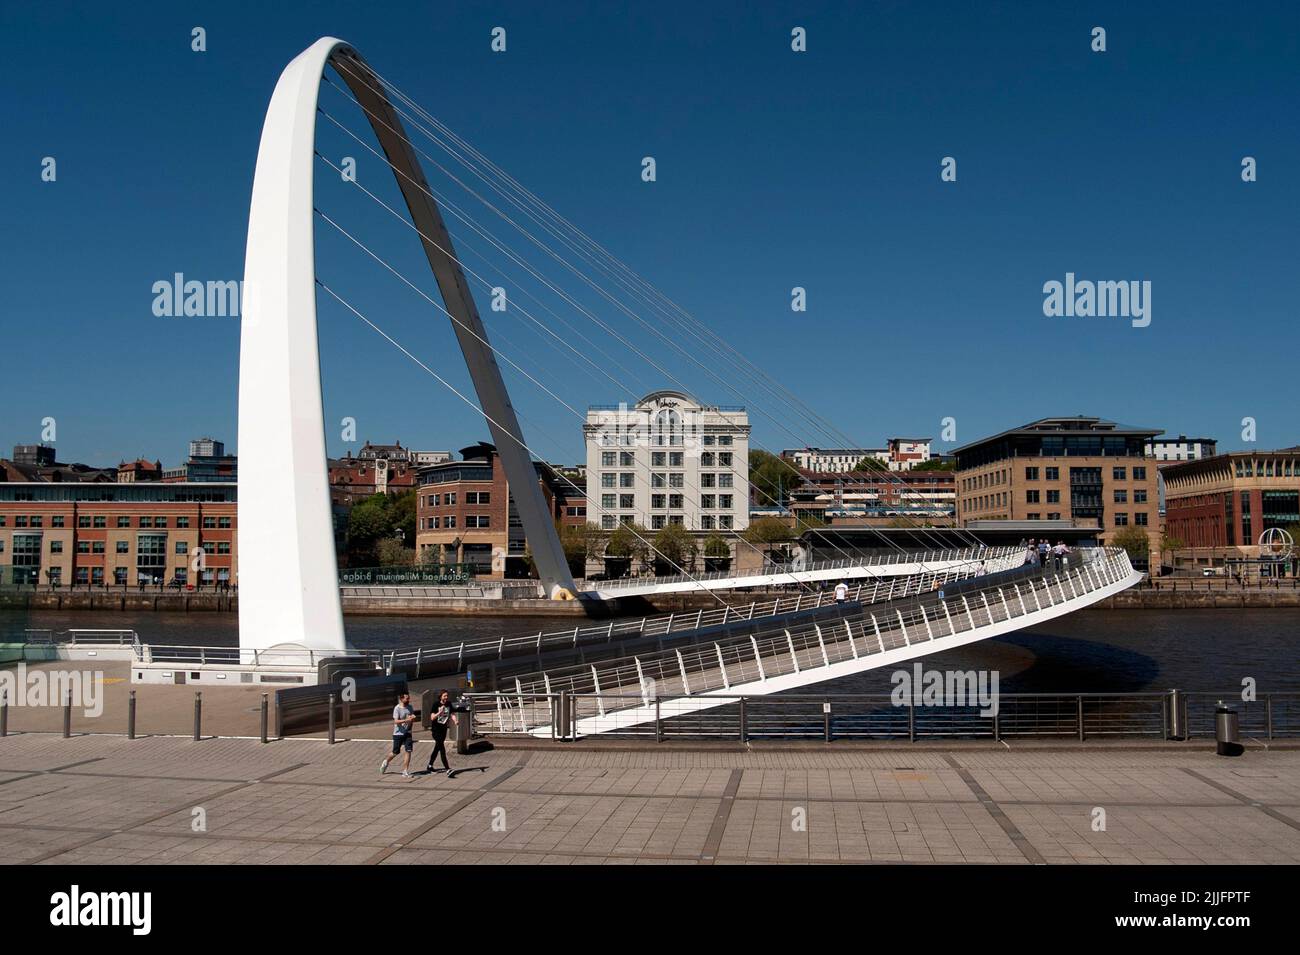 The Millennium Bridge, Newcastle Gateshead quayside Stock Photo